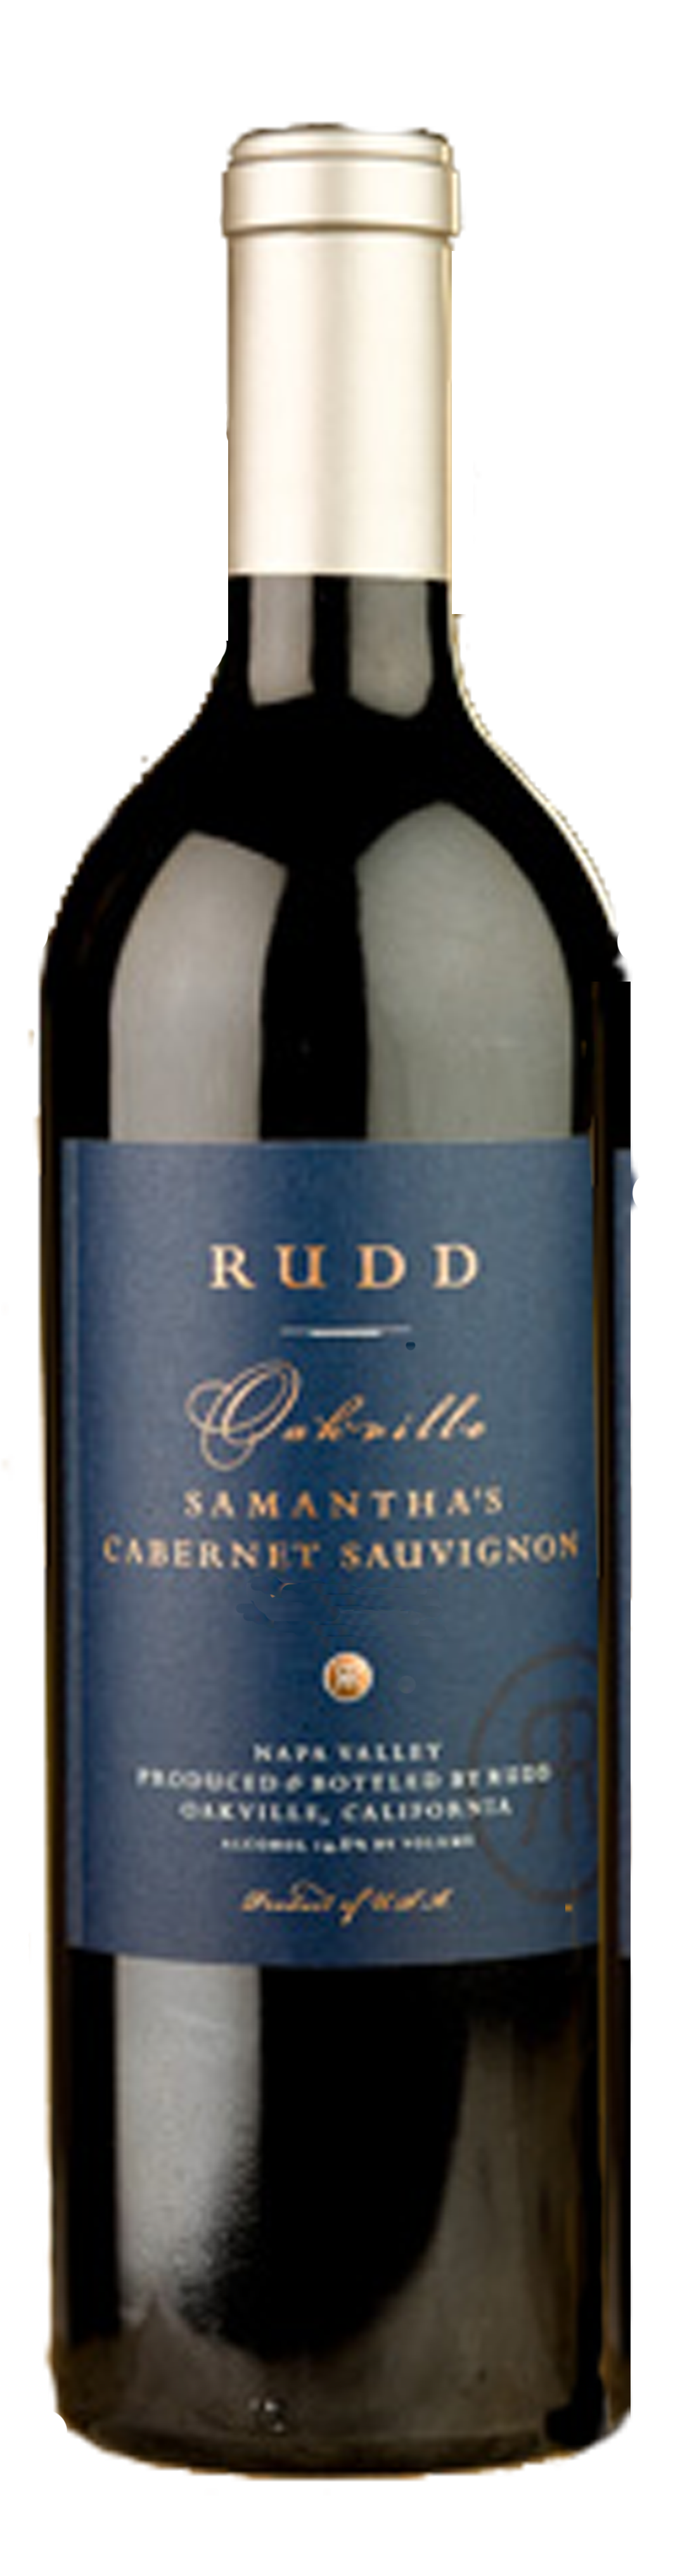 Bottle shot of 2009 Samantha's Vineyard Cabernet Sauvignon